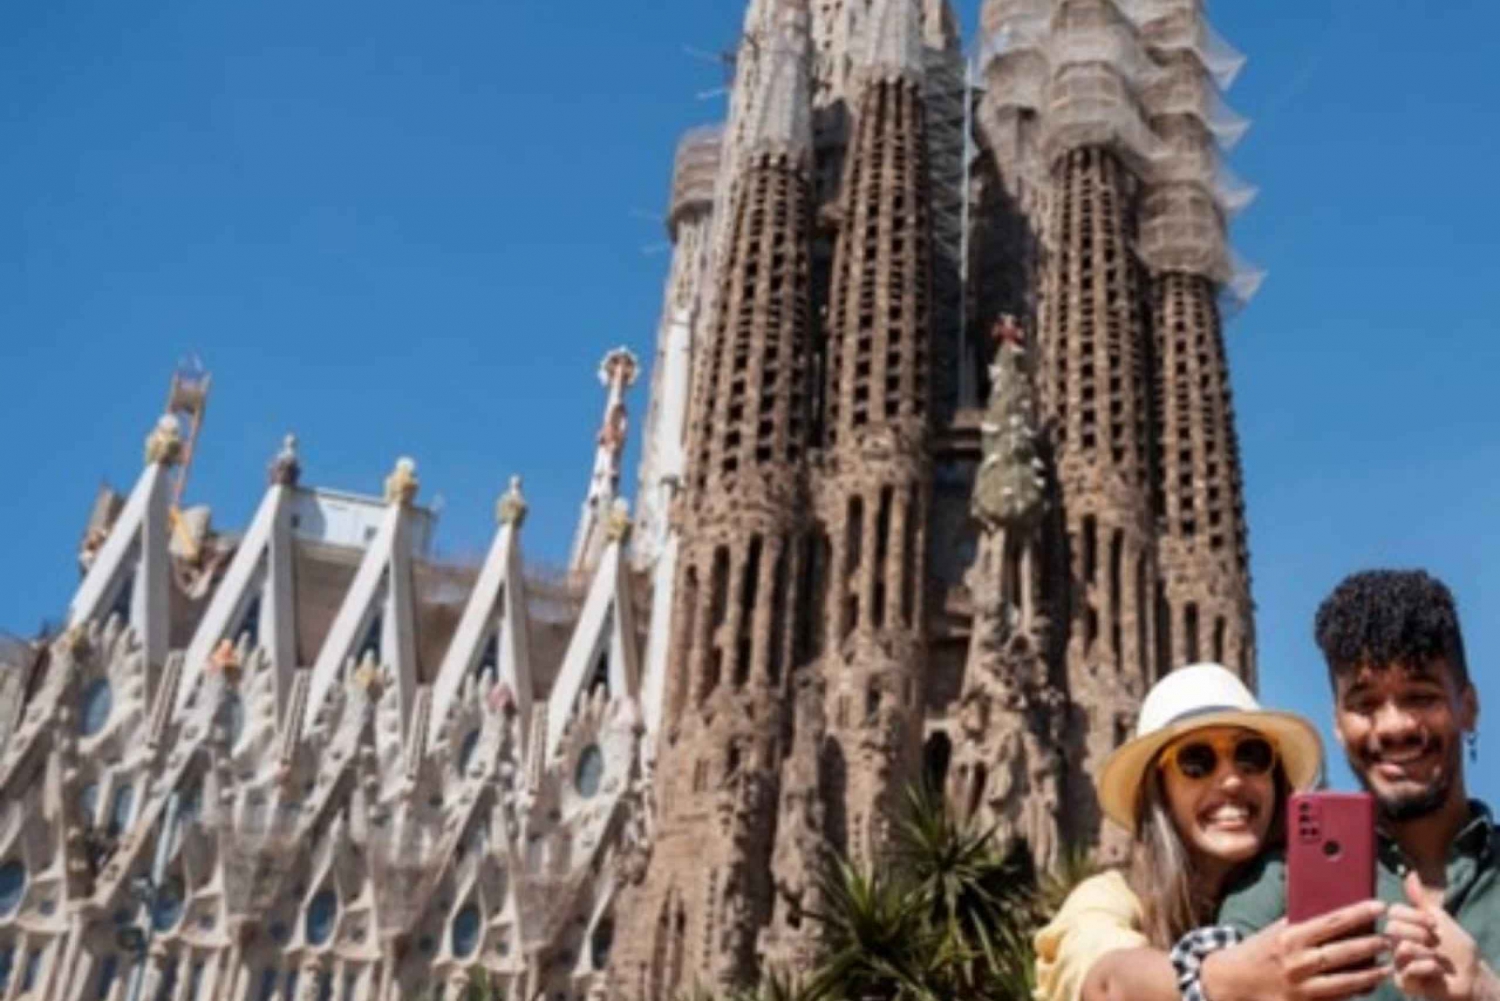 Barcelona: Obras de Gaudi: Tour a pie Modernismo y Obras de Gaudi: Tour a pie Modernismo y Obras de Gaudi